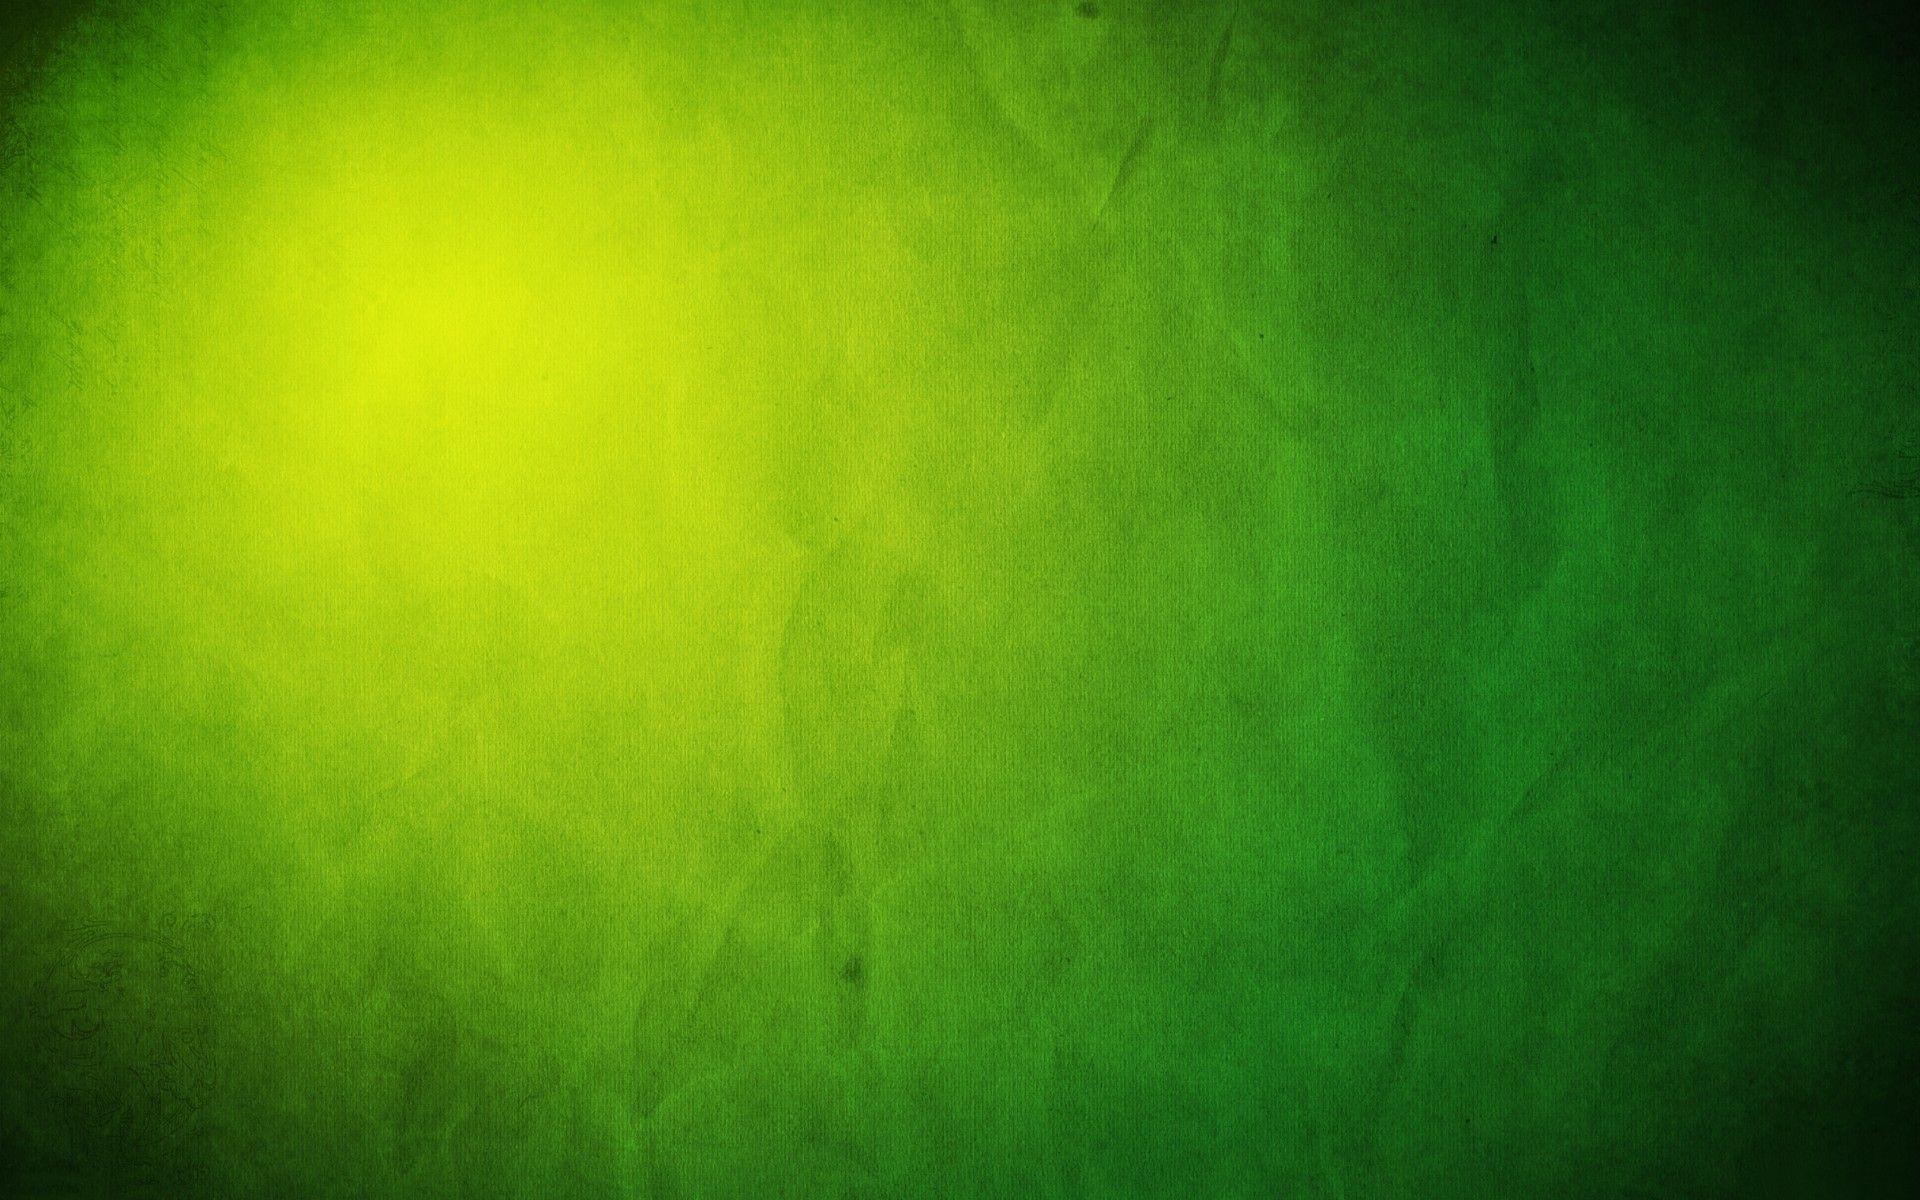 Abstract Green Wallpaper Vector Download Free Vector Art Stock